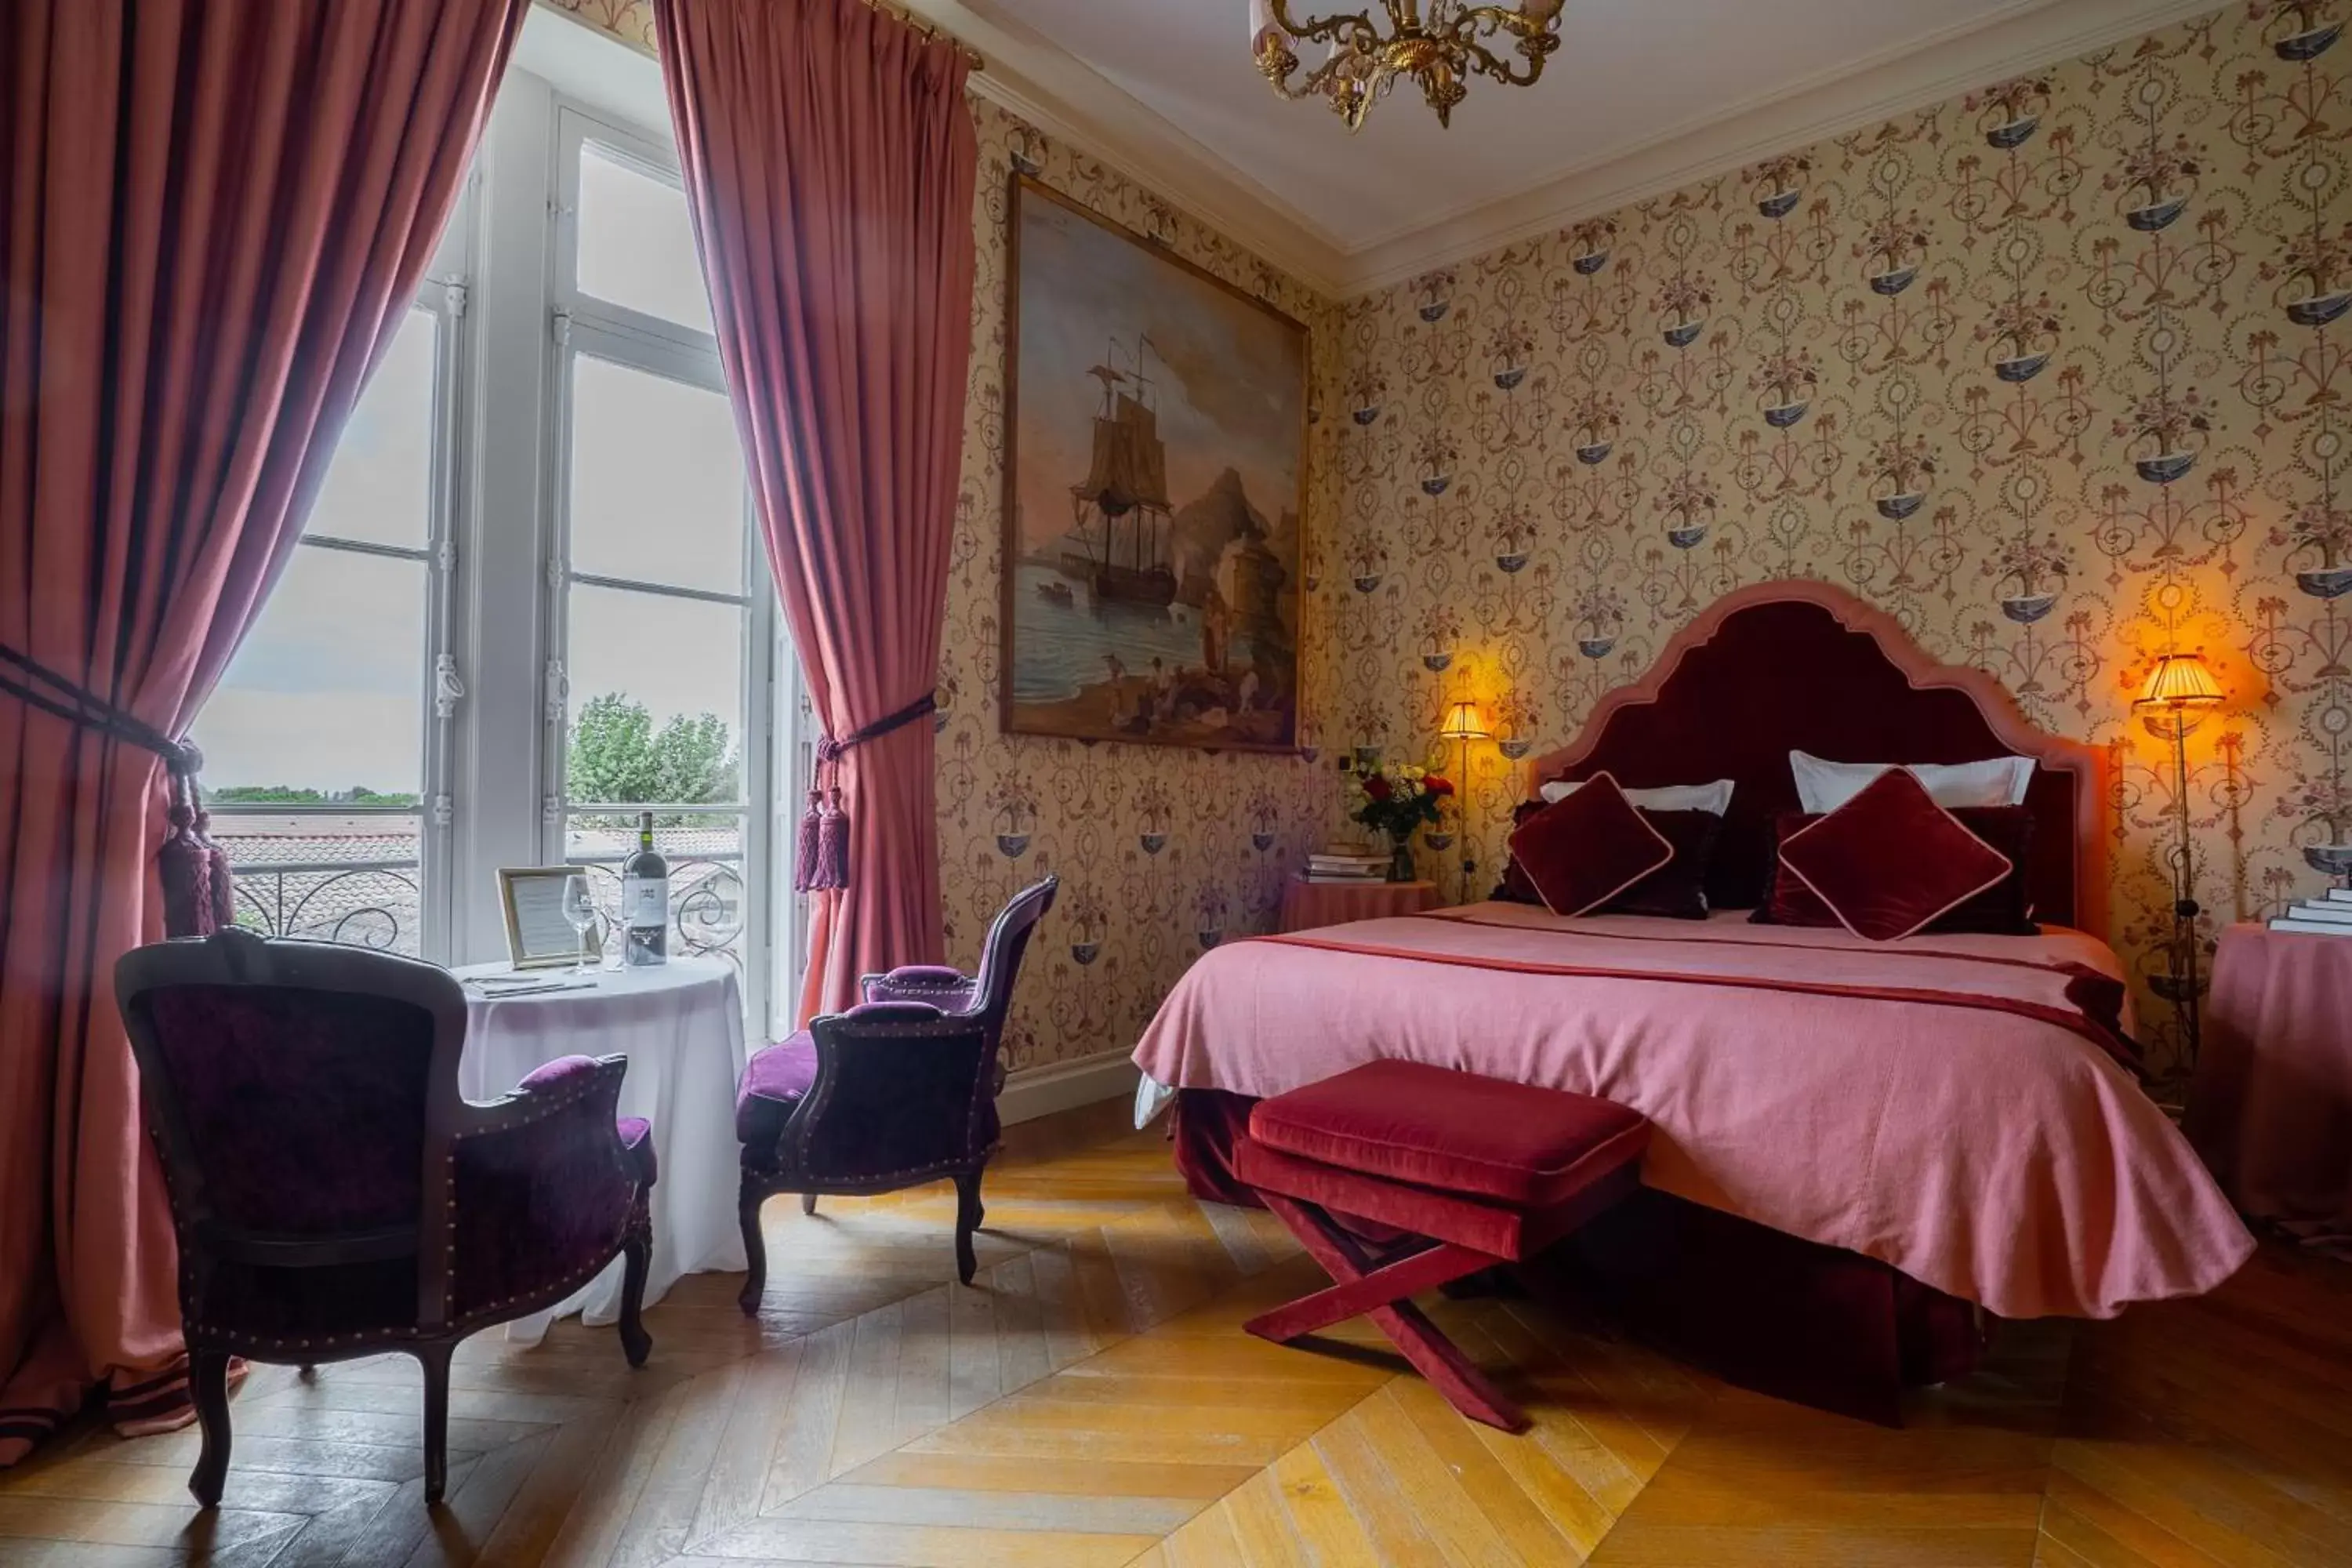 Bedroom in Château Pape Clément